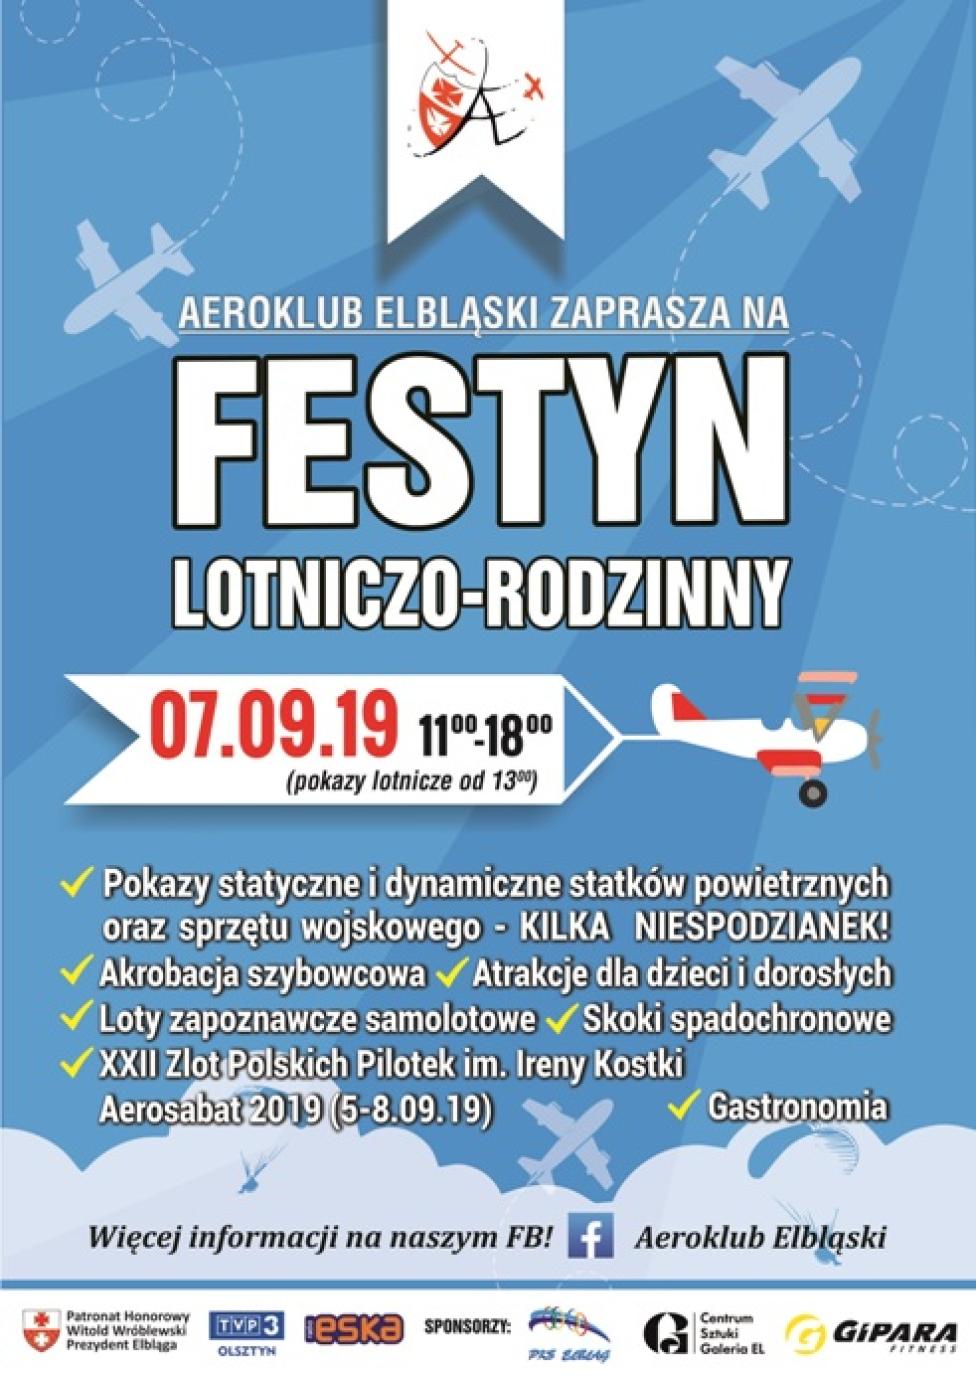 Festyn Lotniczo-Rodzinny w Elblągu (fot. Aeroklub Elbląski)